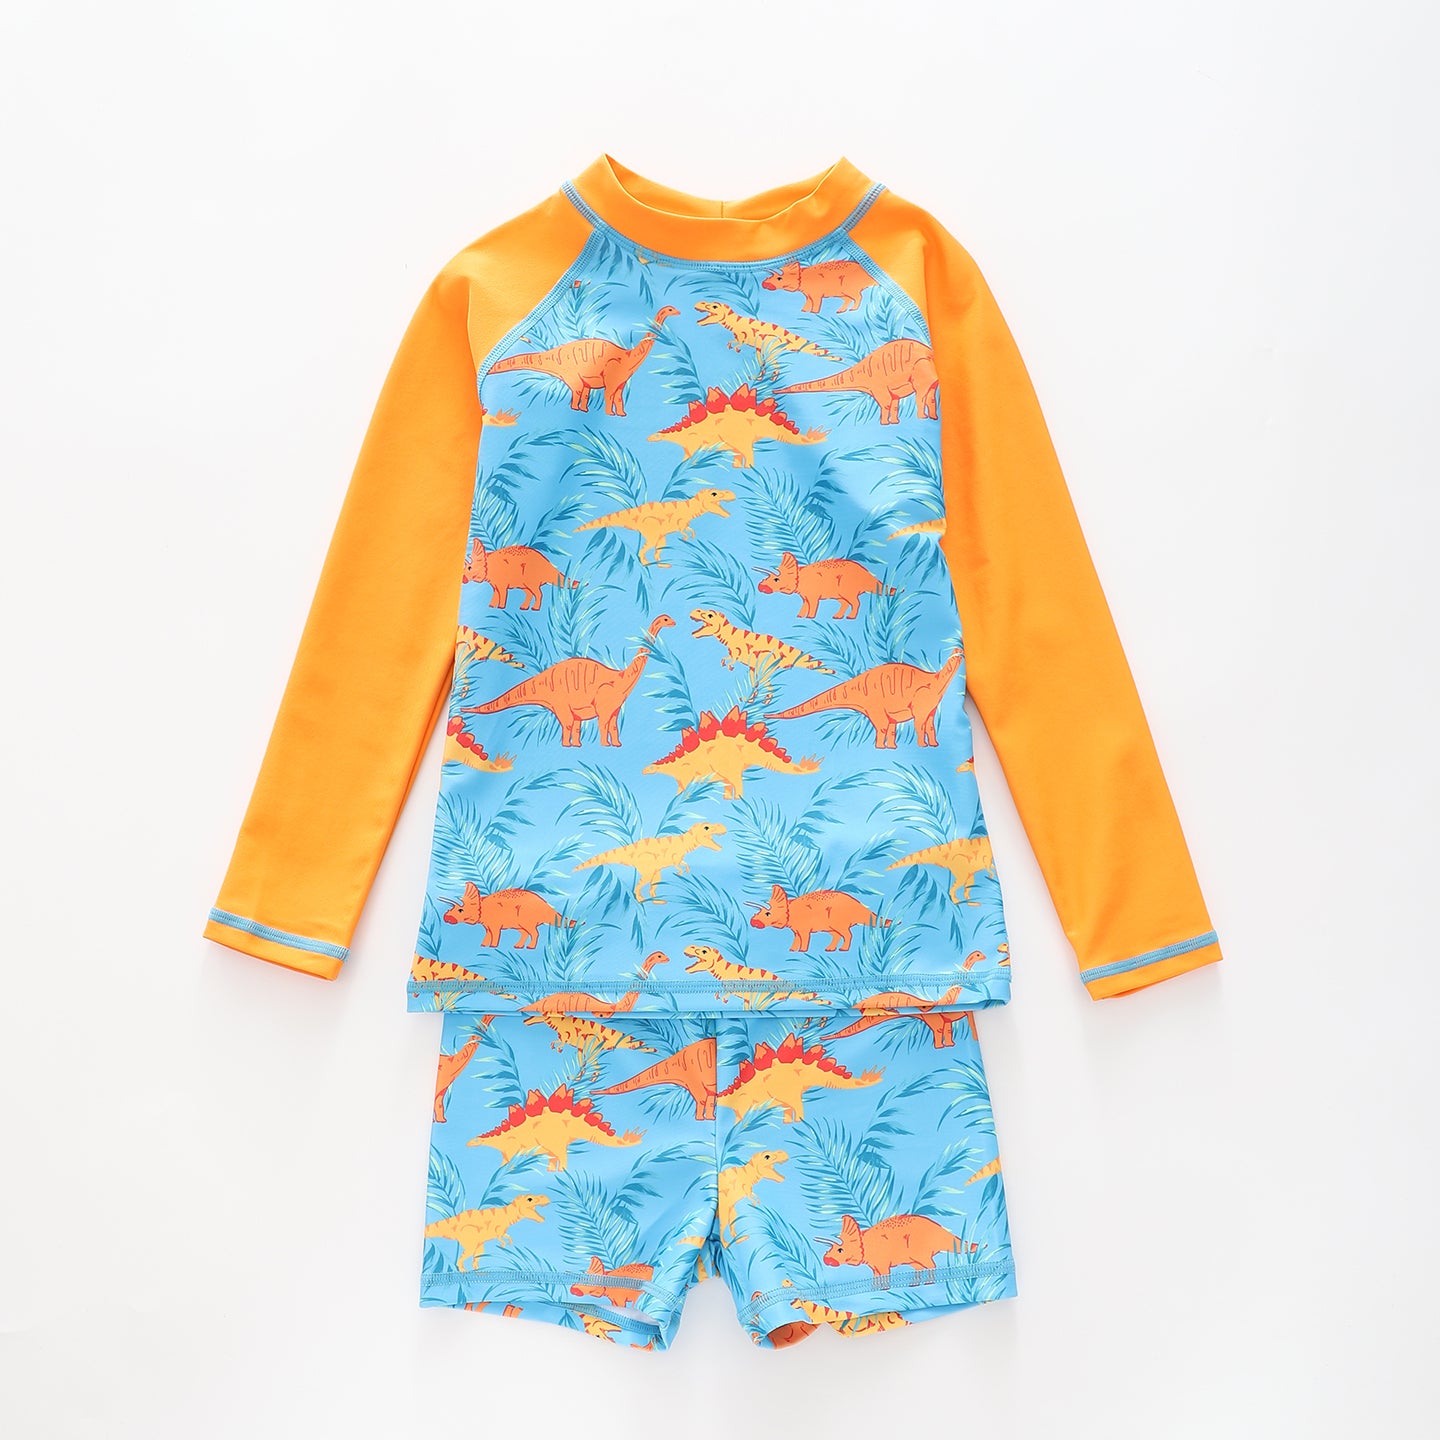 Boy's Blue and Orange Dinosaur Print Two Piece Swimsuit Set